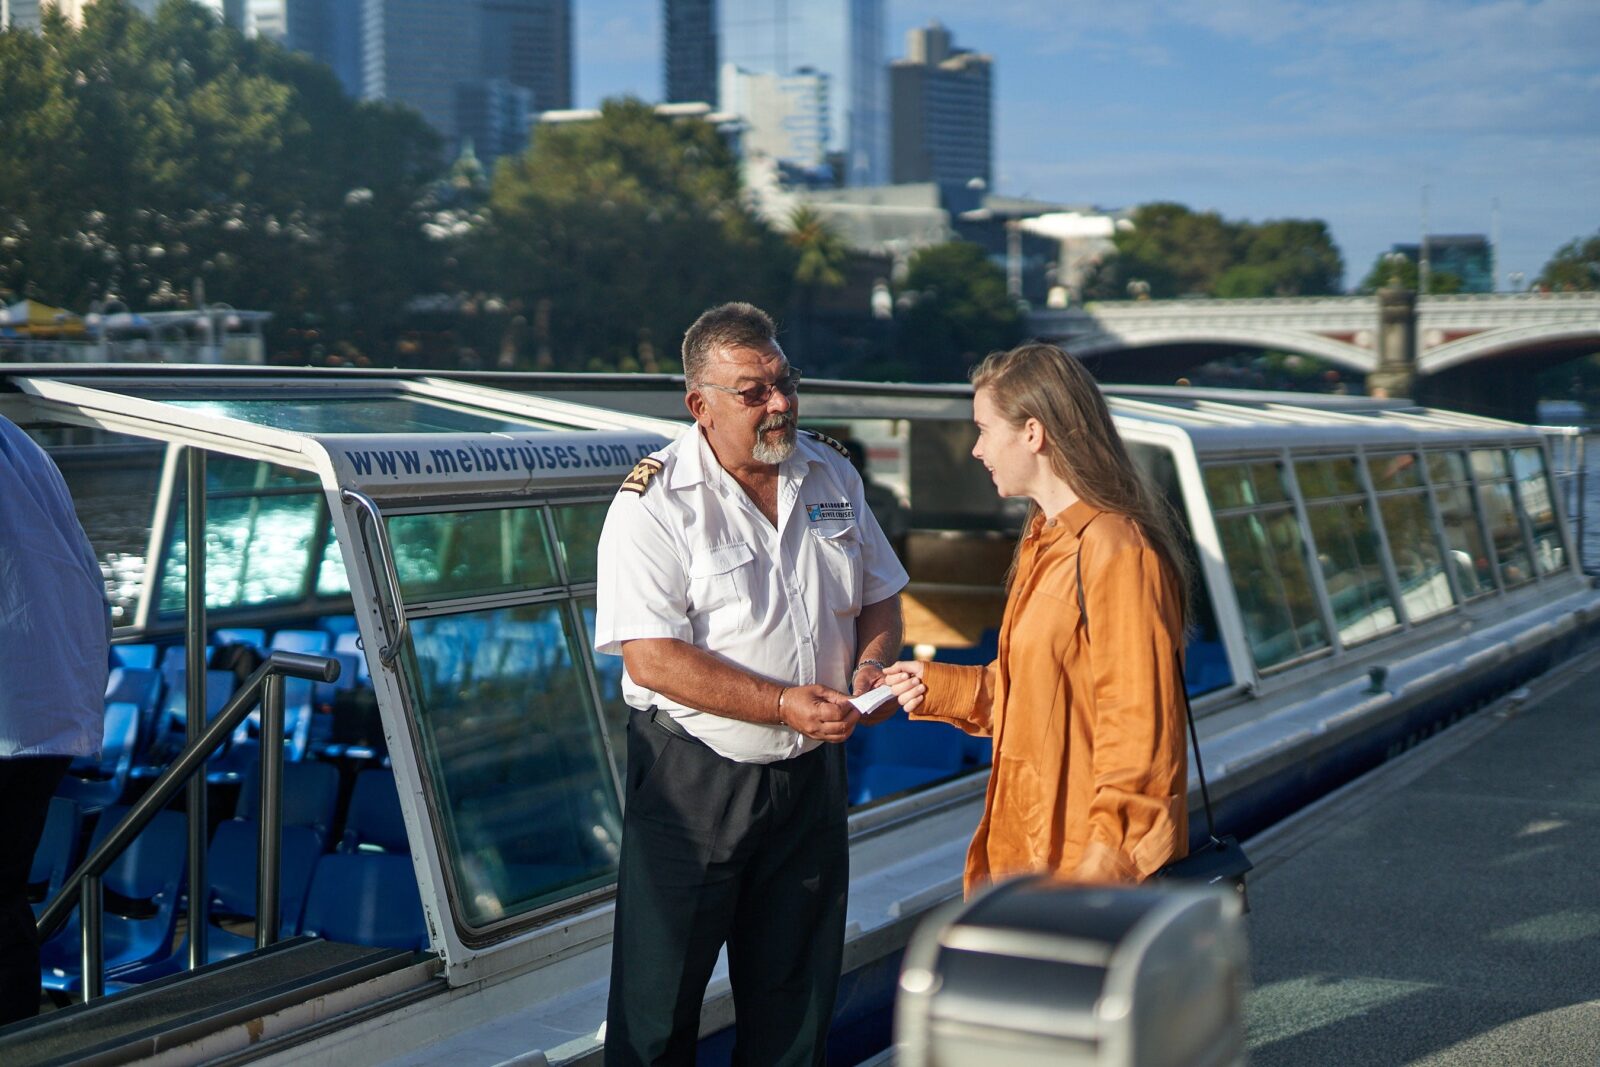 Melbourne River Cruises boarding